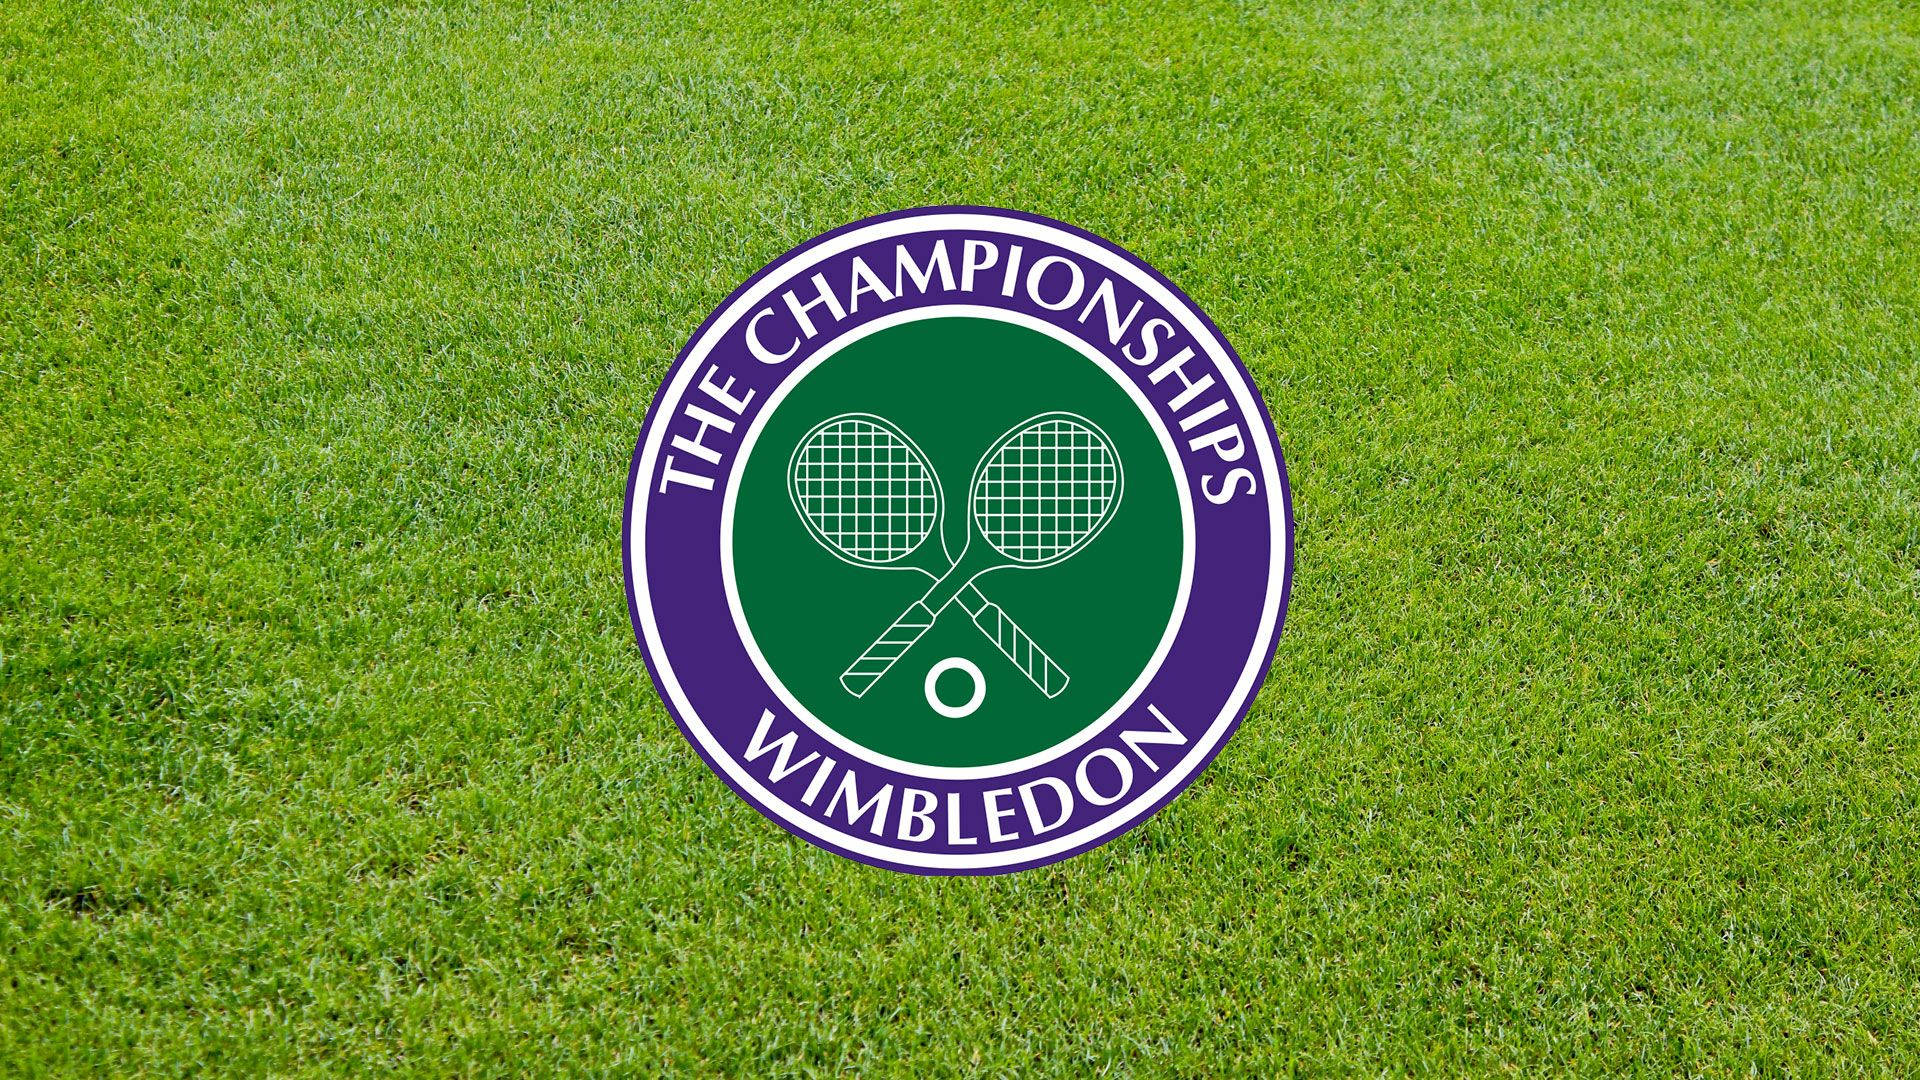 Wimbledon Logo Illustration In Grass Field Wallpaper